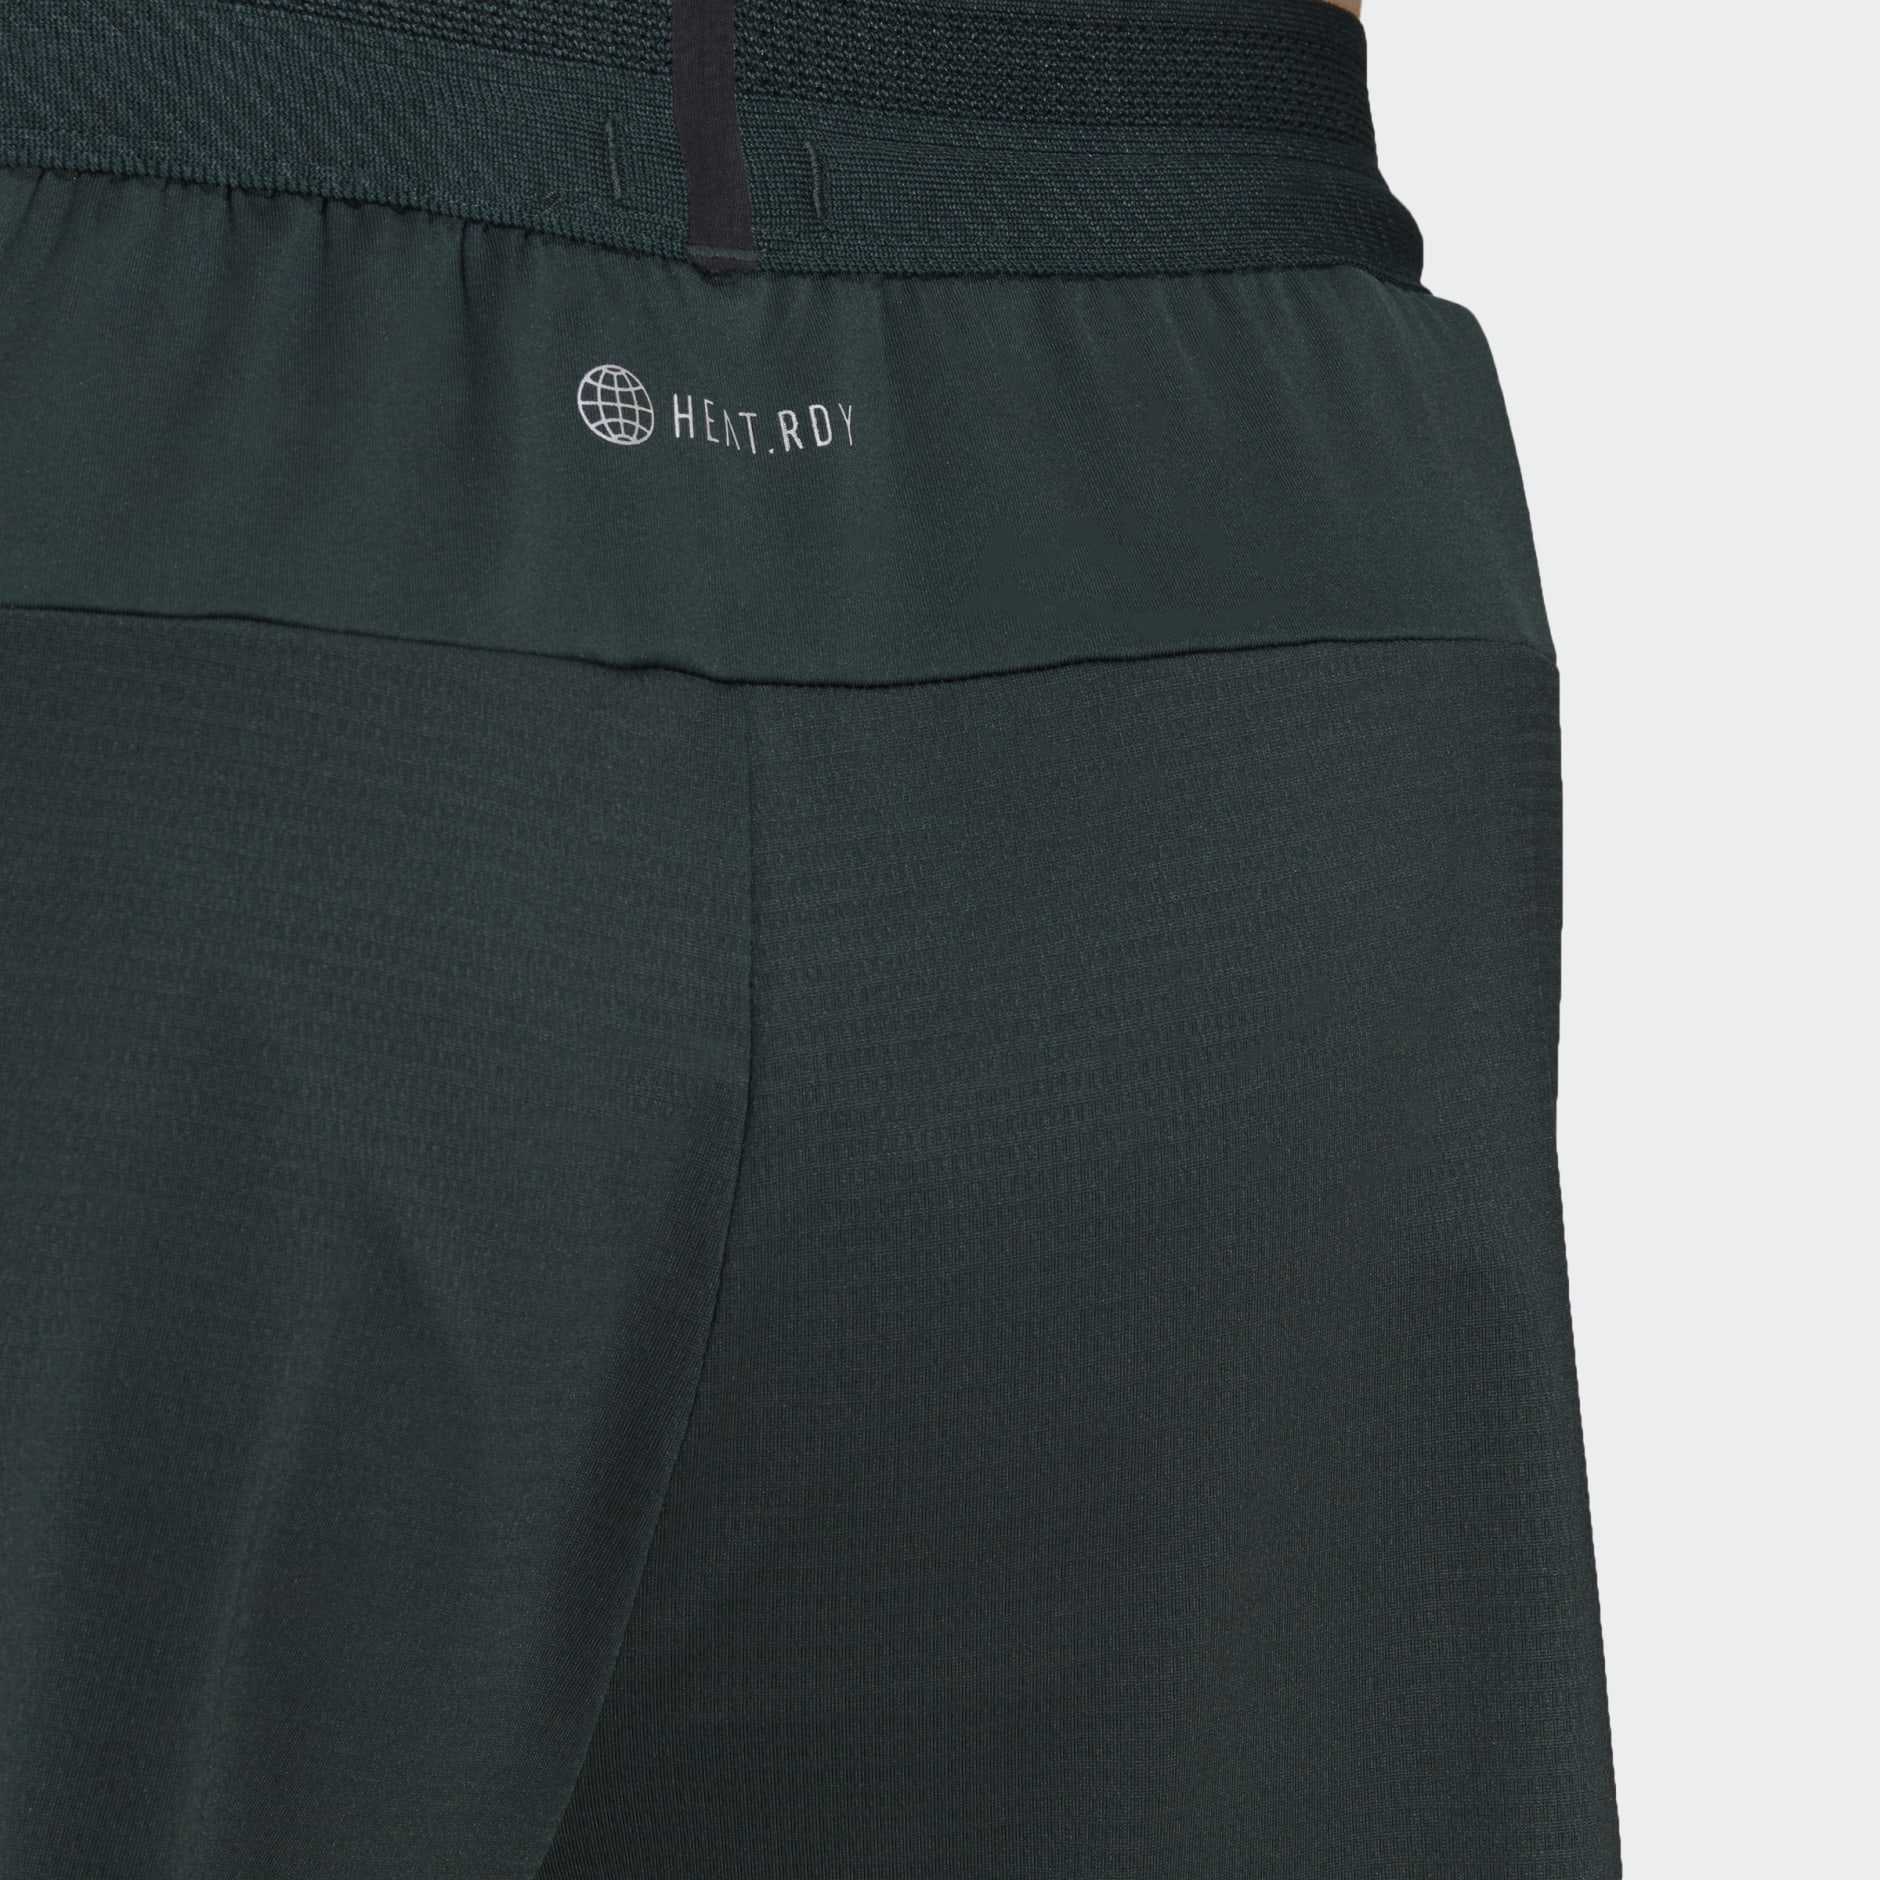 Men's Clothing - Designed 4 Training HEAT.RDY HIIT Shorts - Green ...